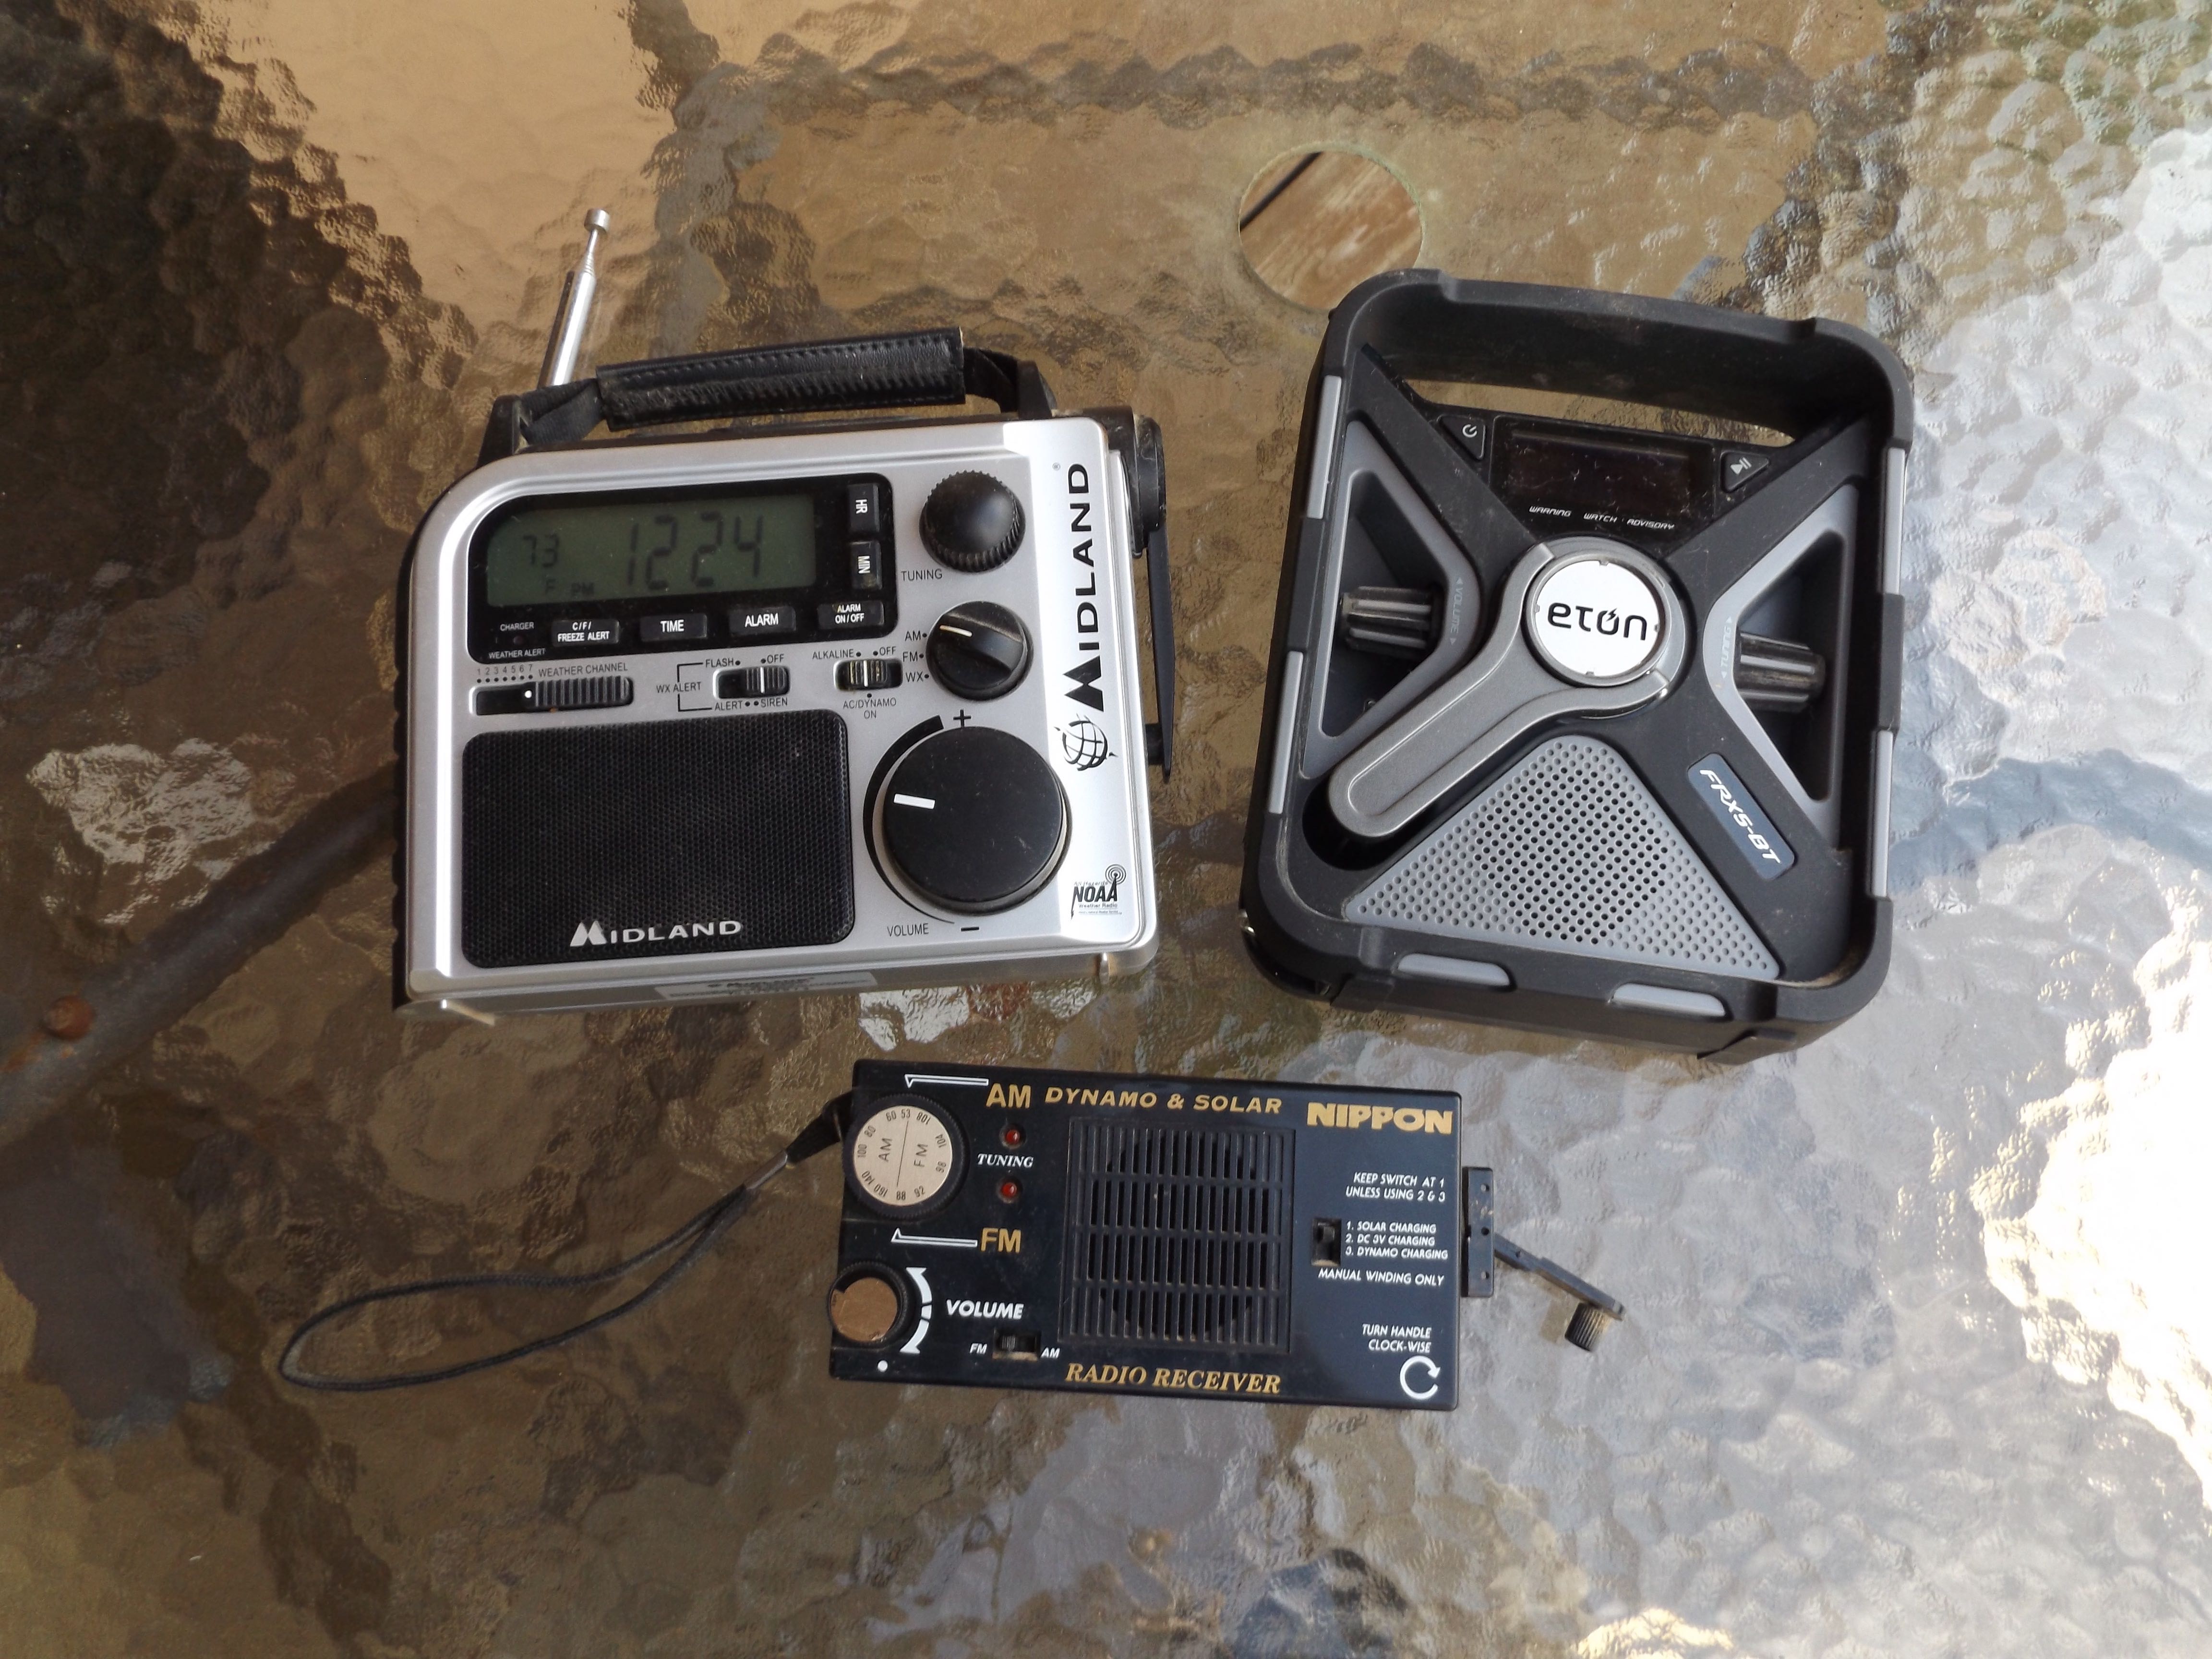 Compact Survival Radios A Review By Pat Cascio